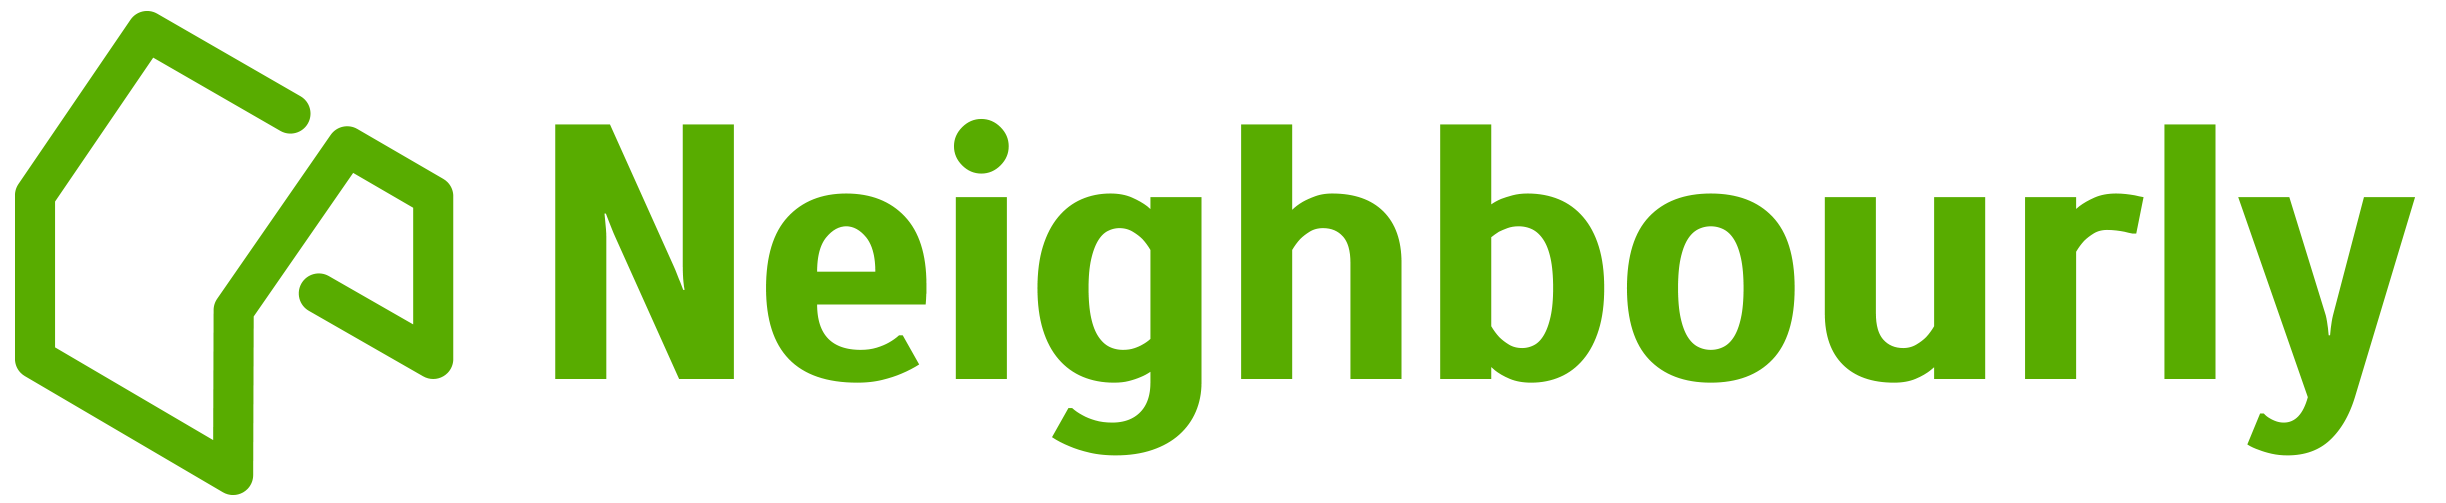 Neighbourly logo